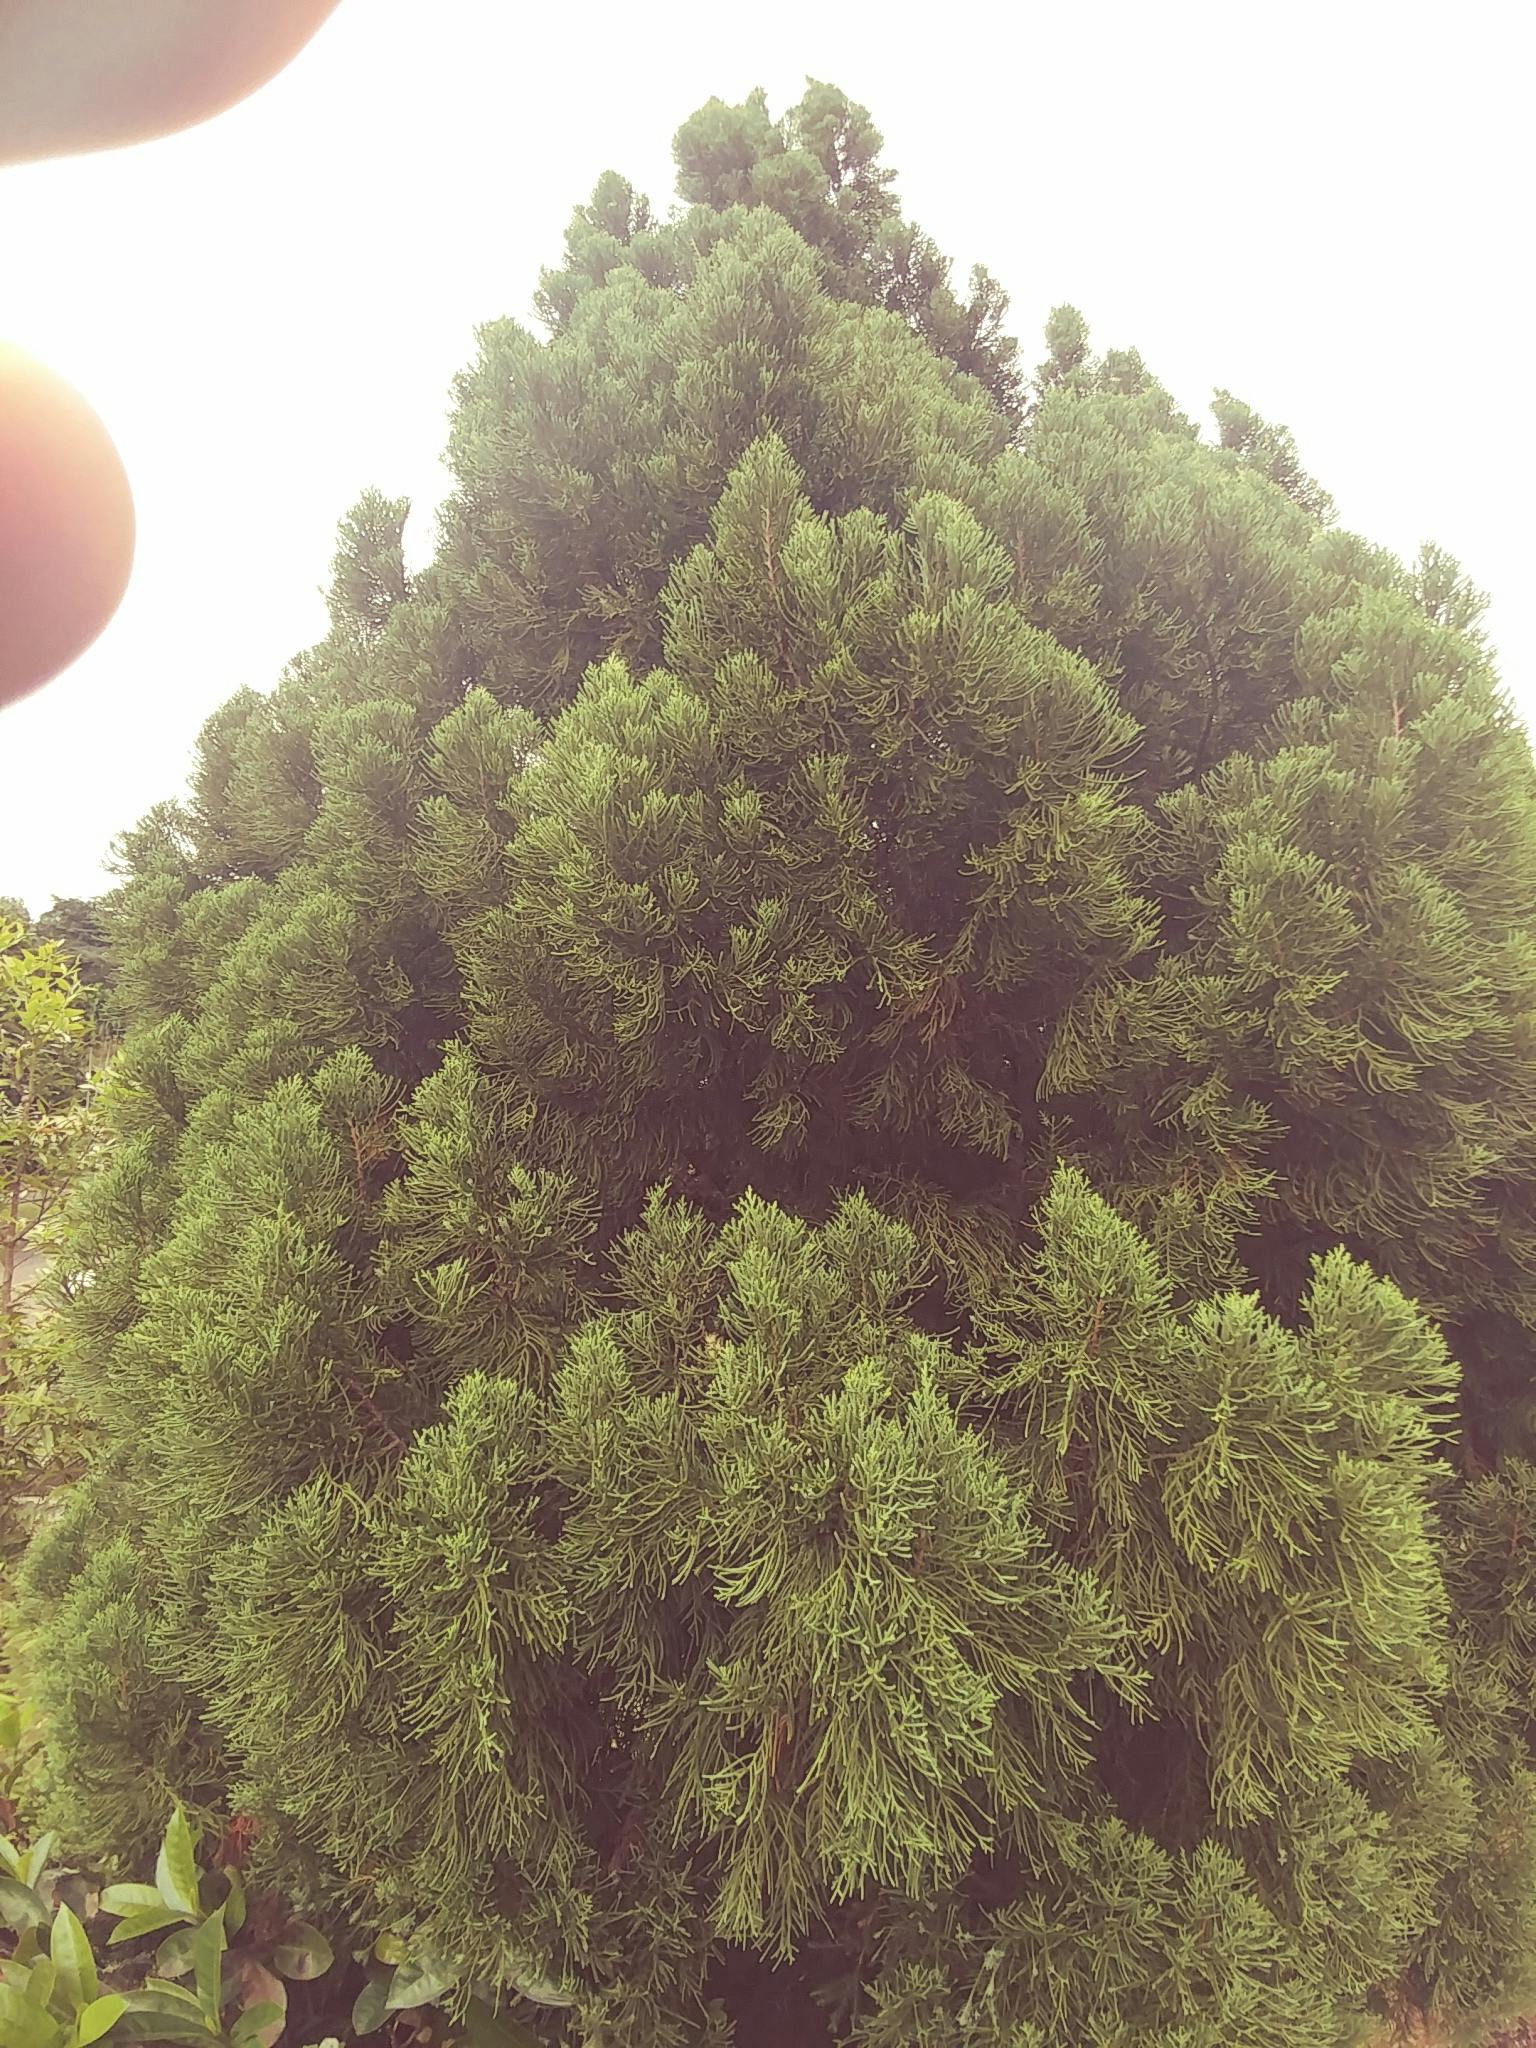 Free stock photo of tree top